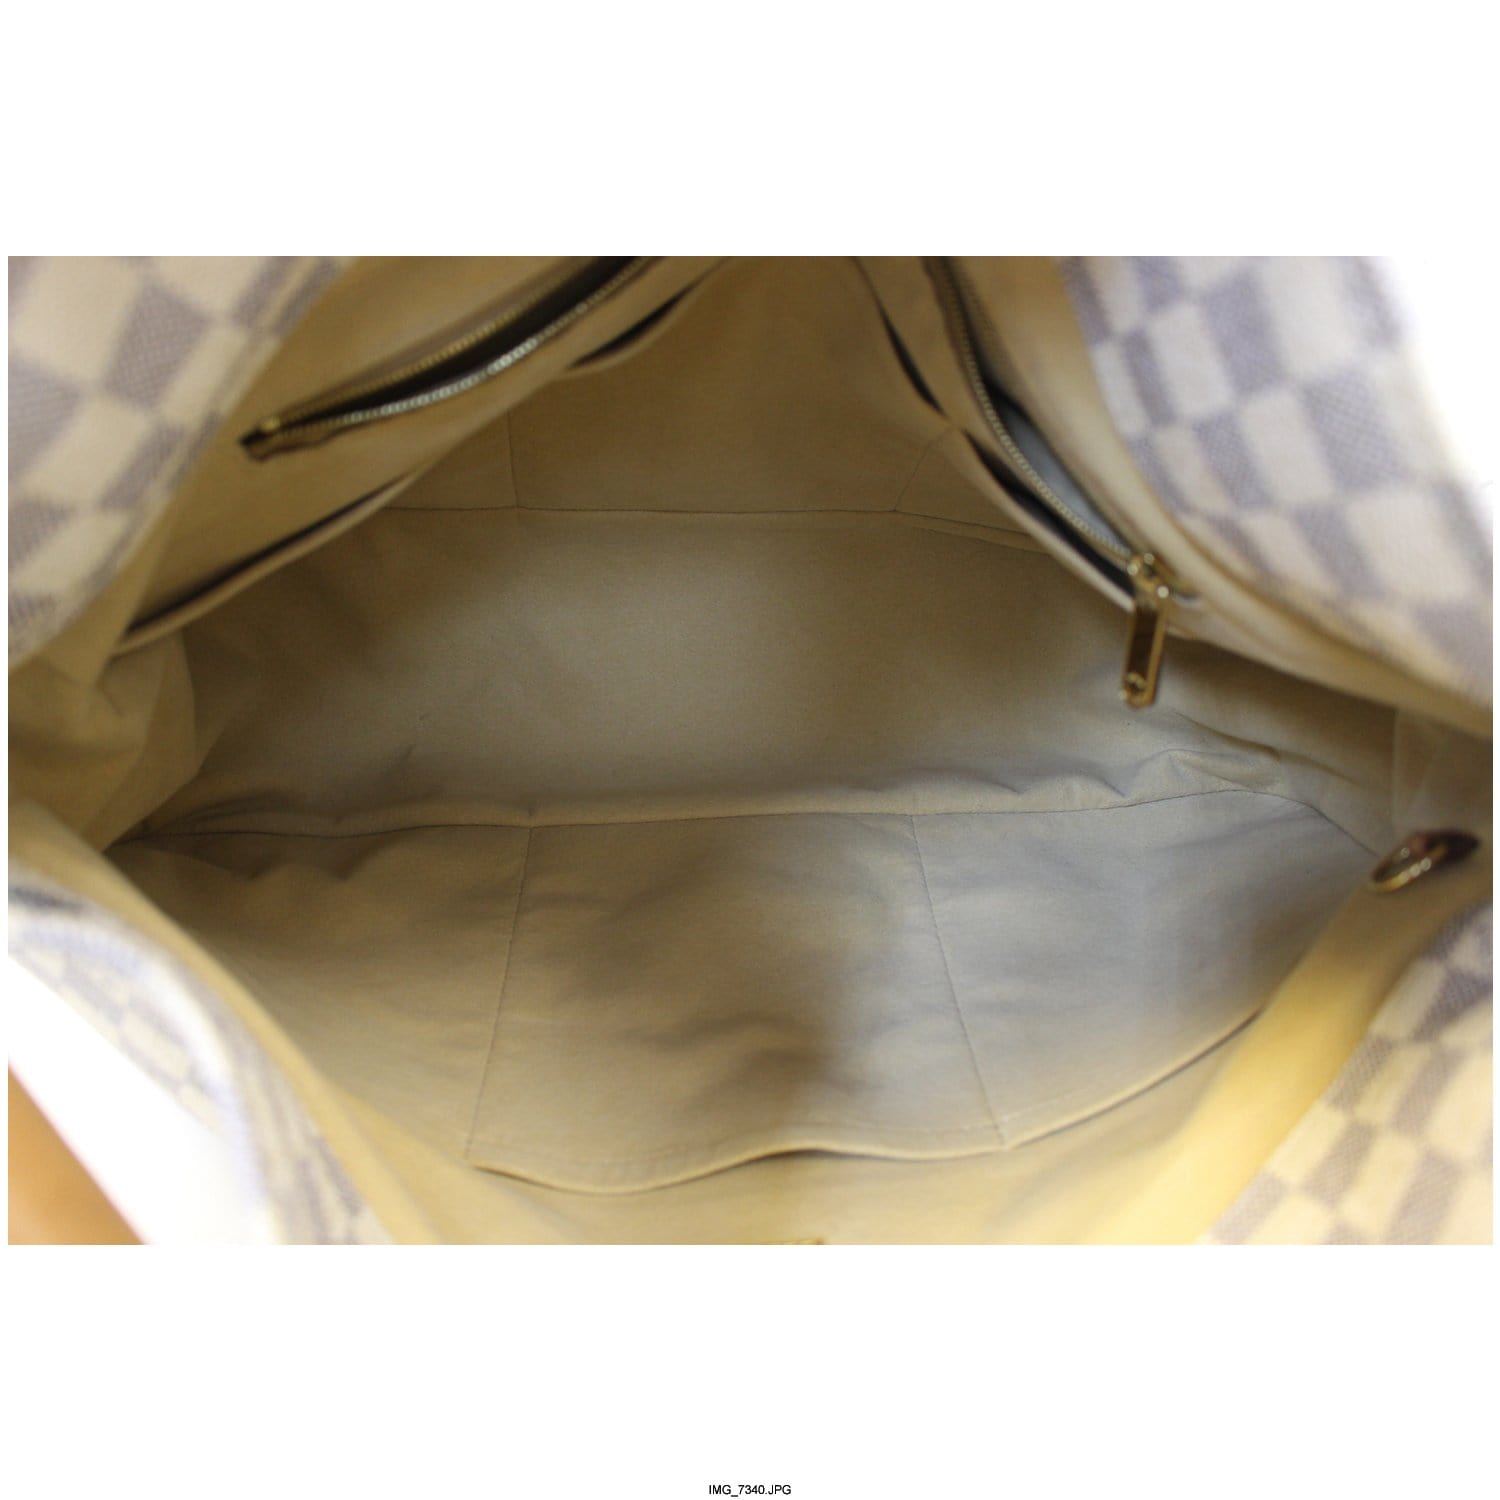 Artsy handbag Louis Vuitton White in Cotton - 38679420